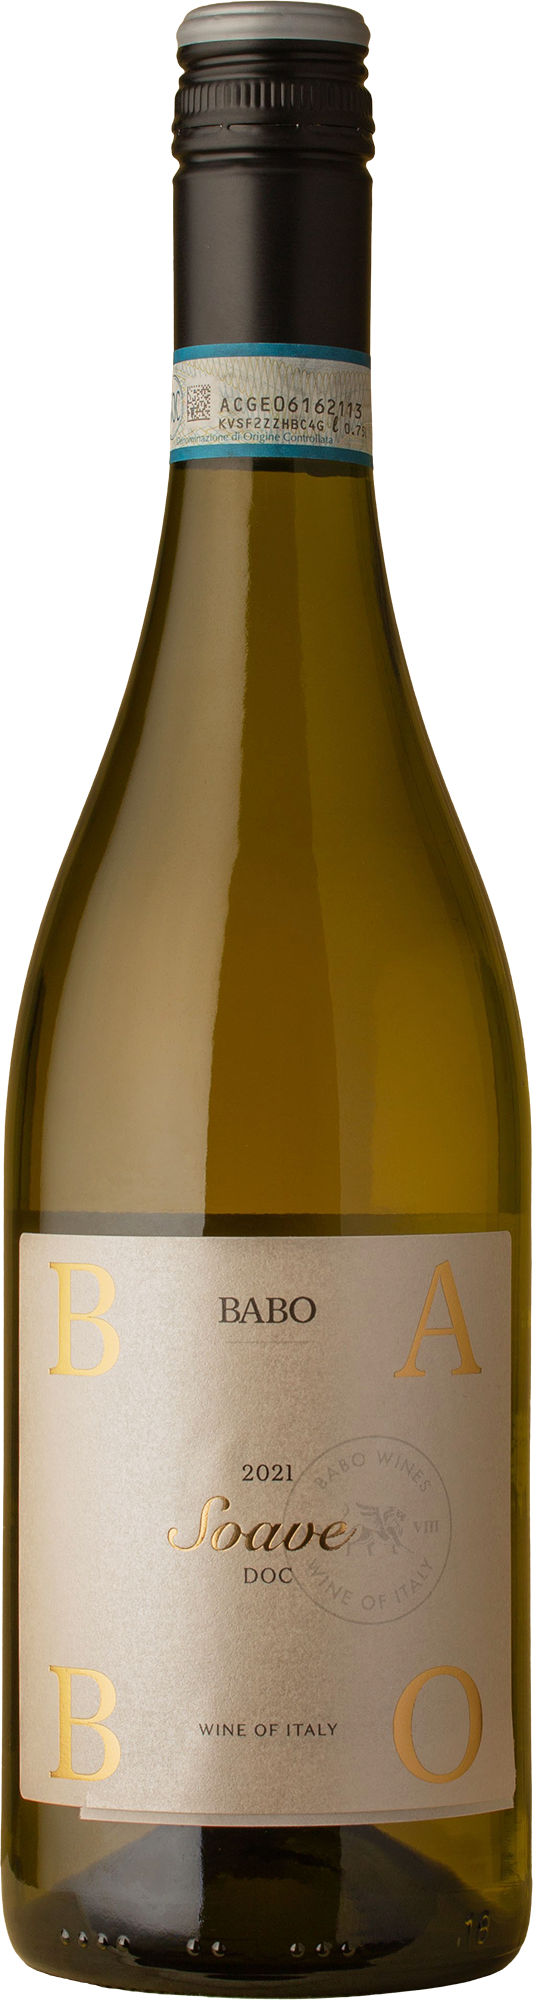 Babo - Soave Garganega 2021 White Wine